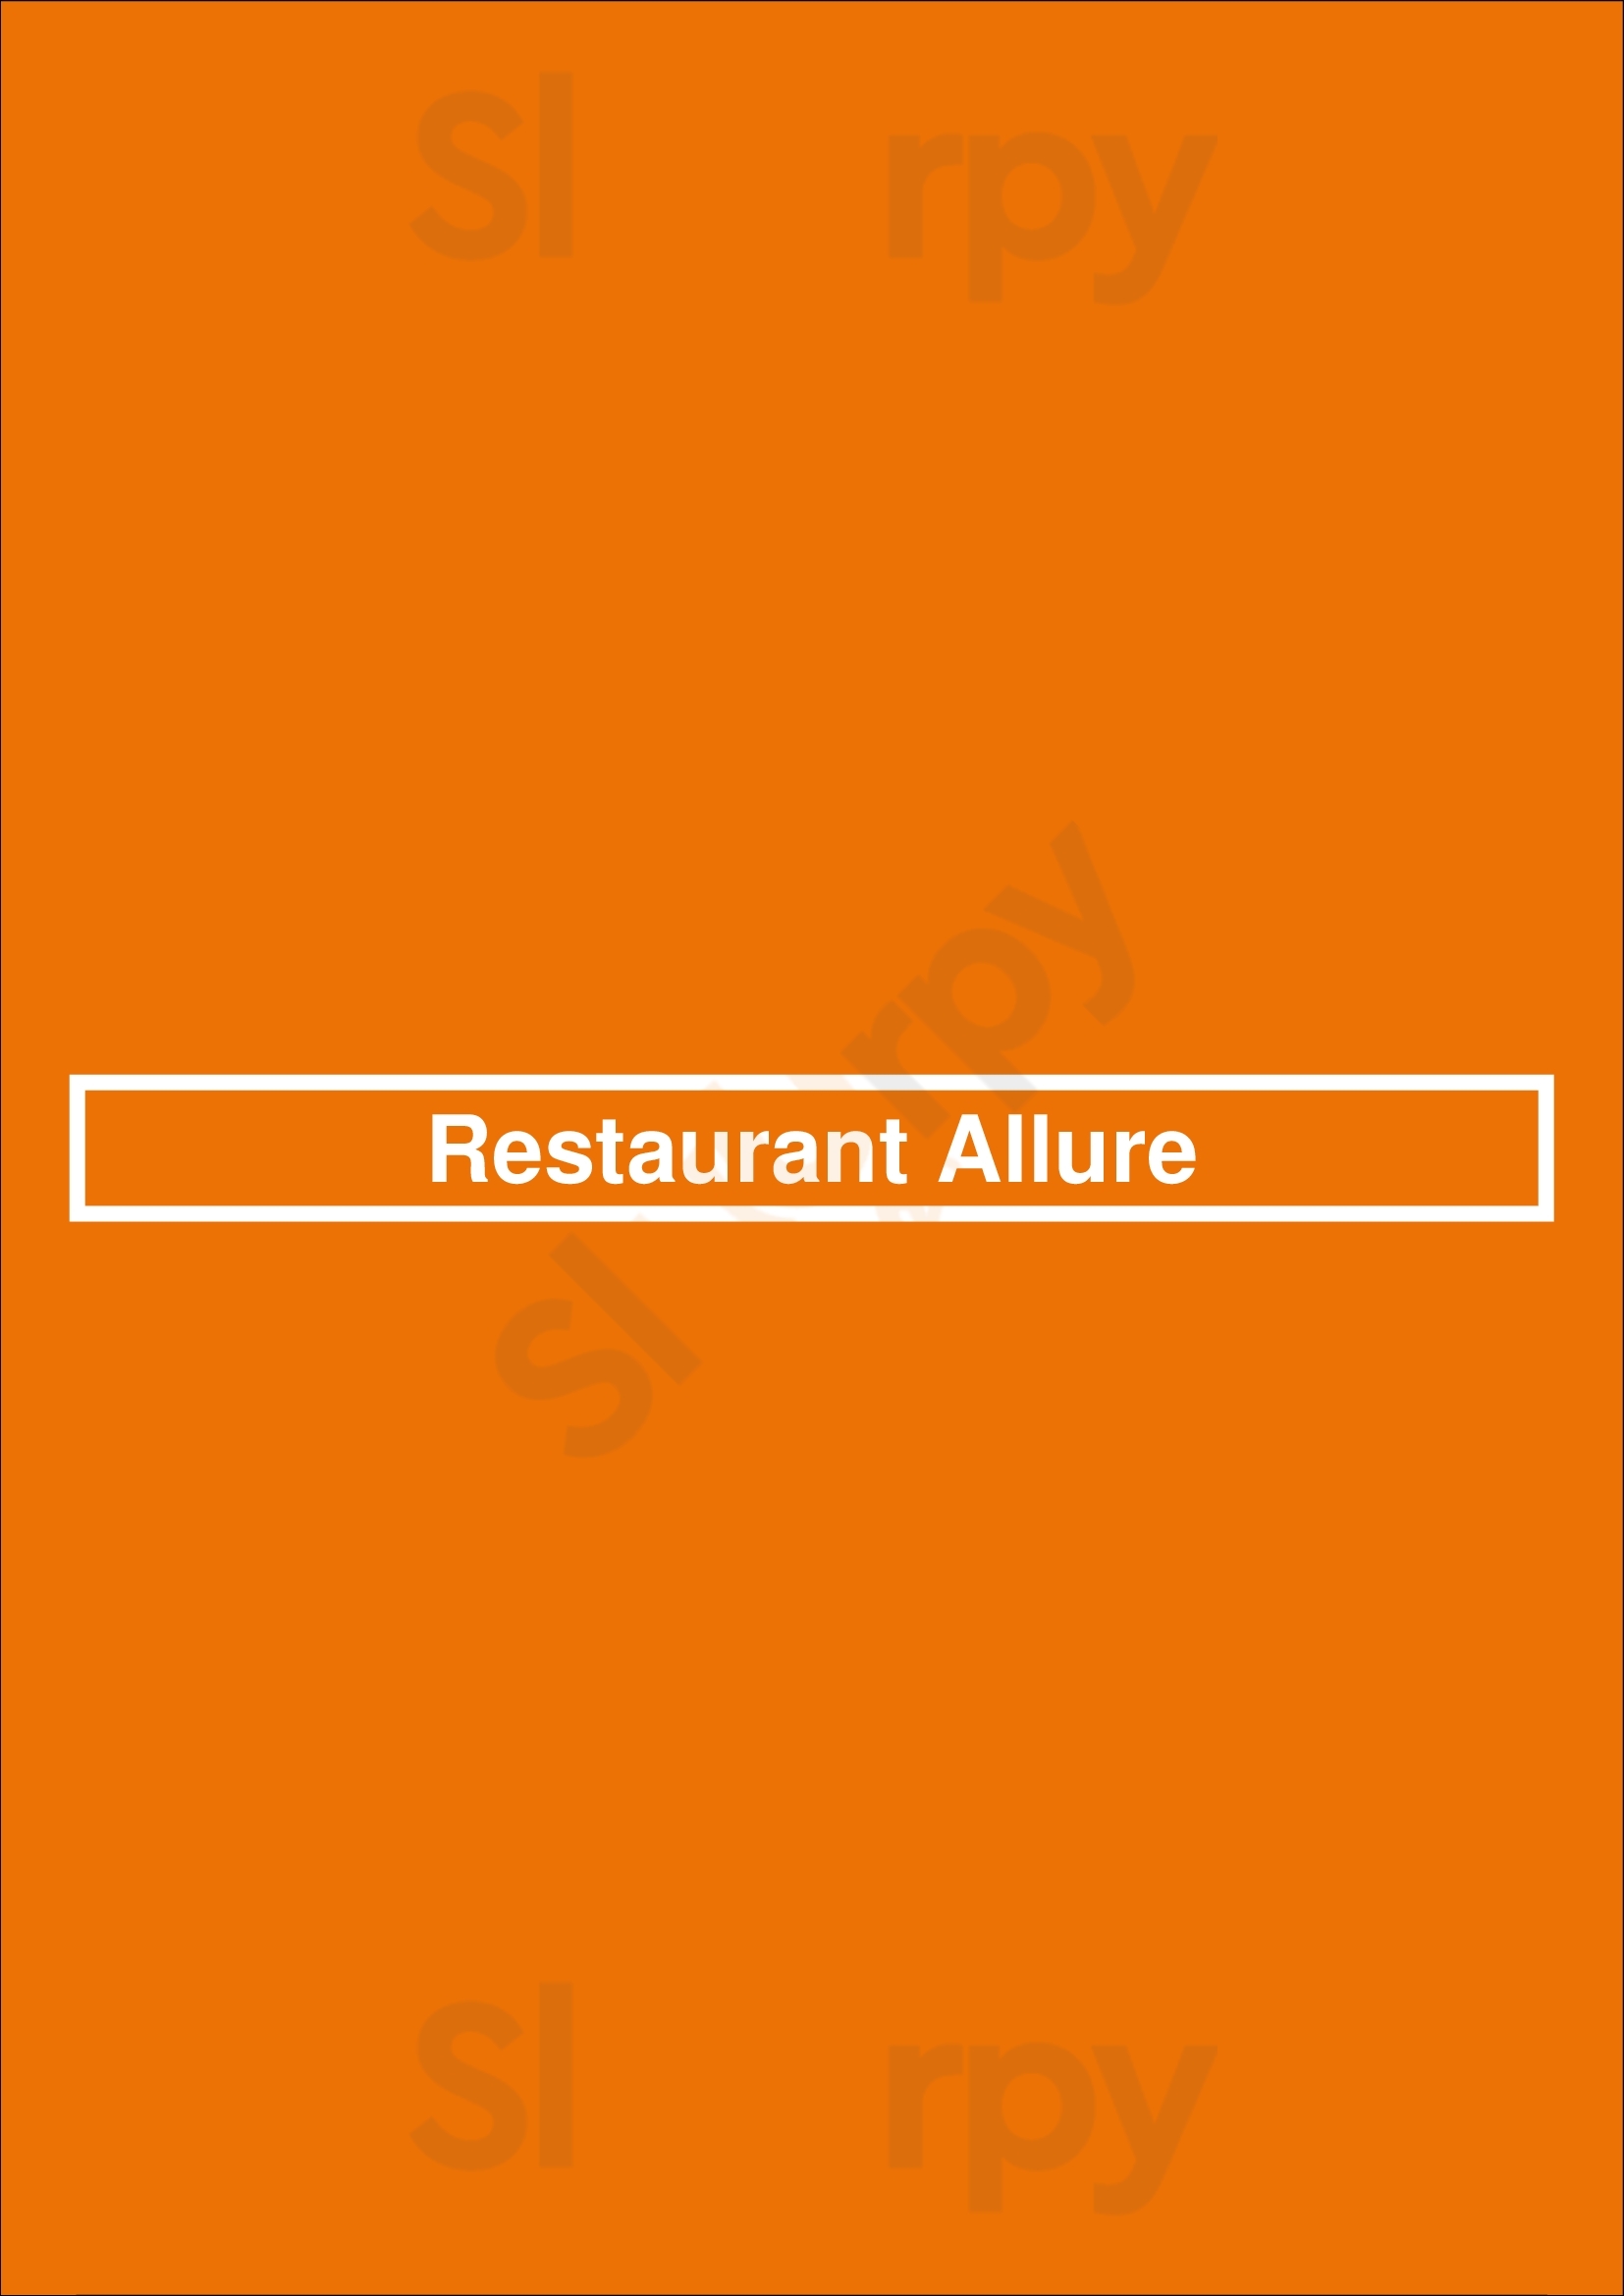 Restaurant Allure Rotterdam Menu - 1